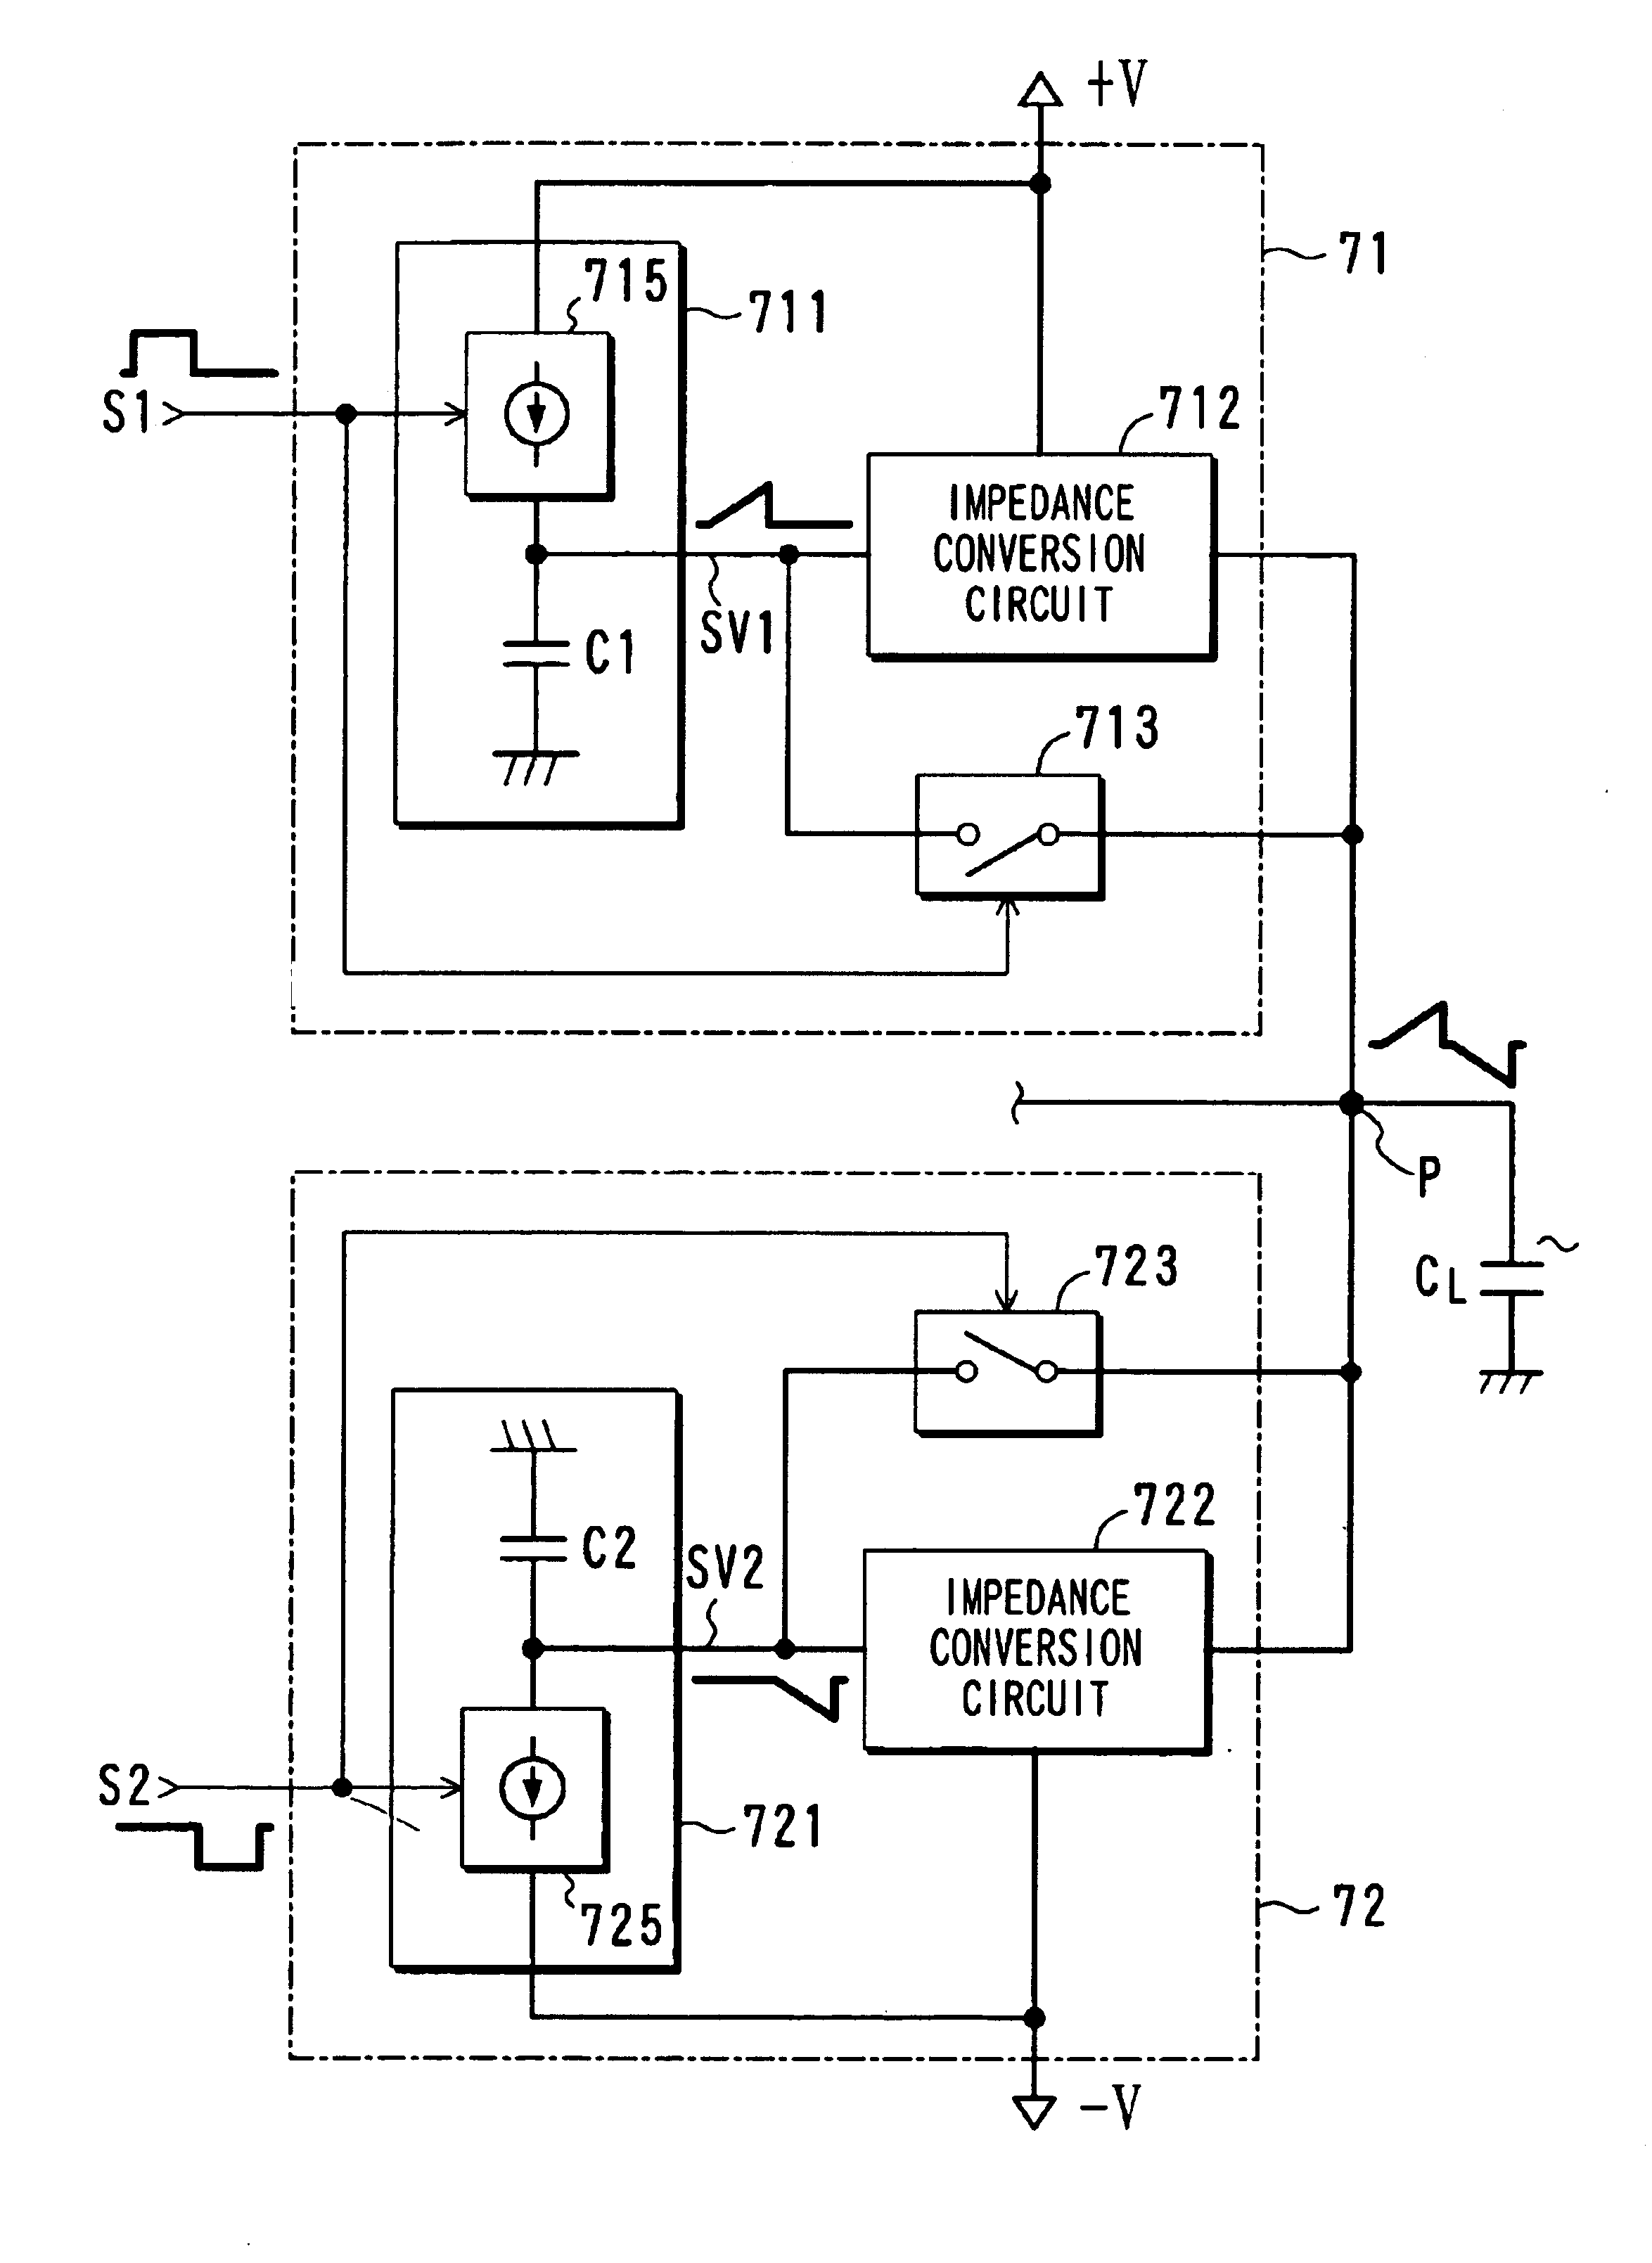 Method and device for driving plasma display panel